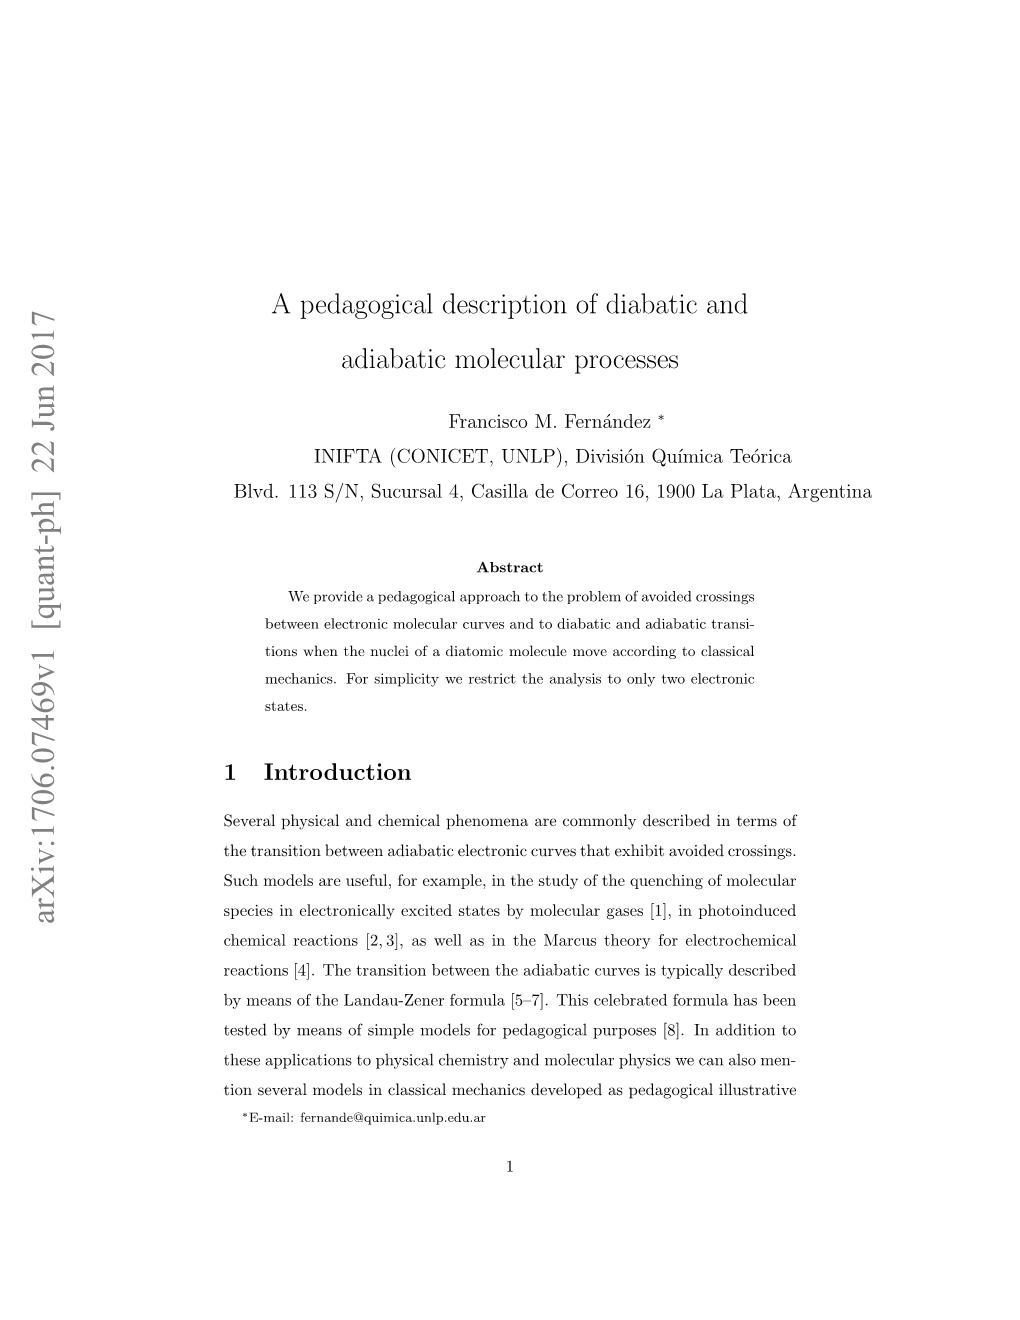 A Pedagogical Description of Diabatic and Adiabatic Molecular Processes